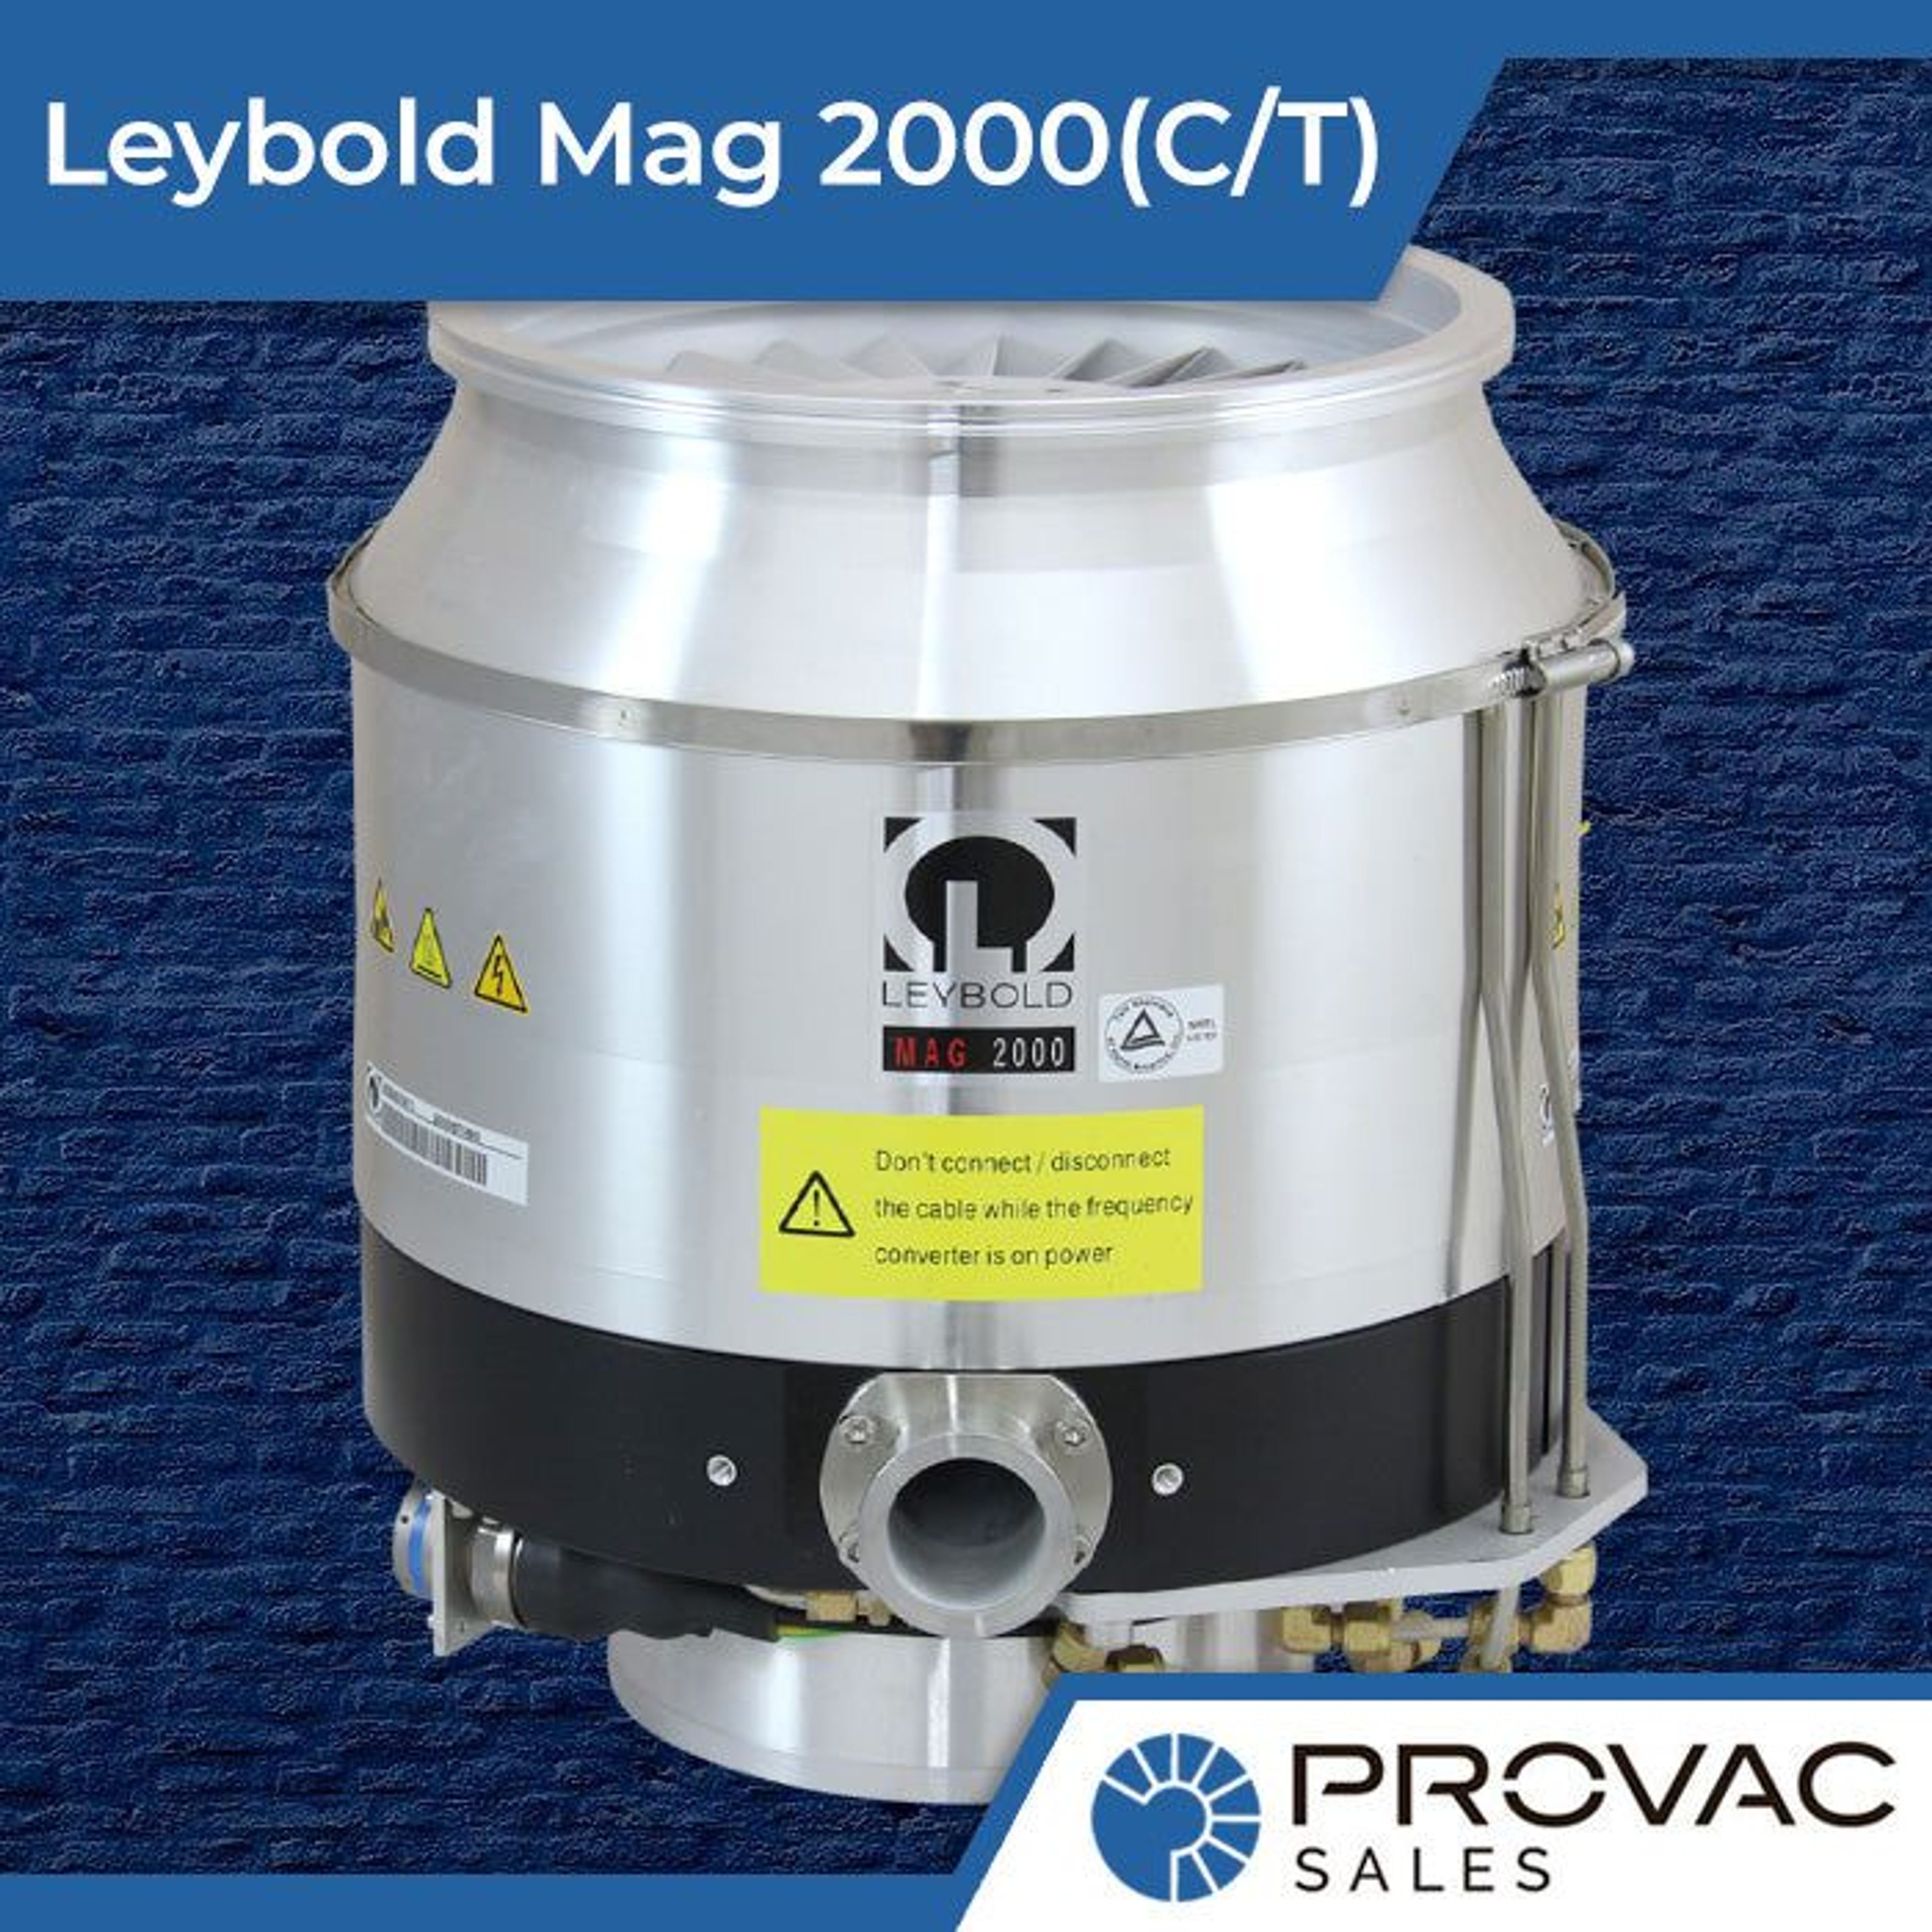 Product Spotlight: Leybold Mag 2000C/CT Turbo Pump Background